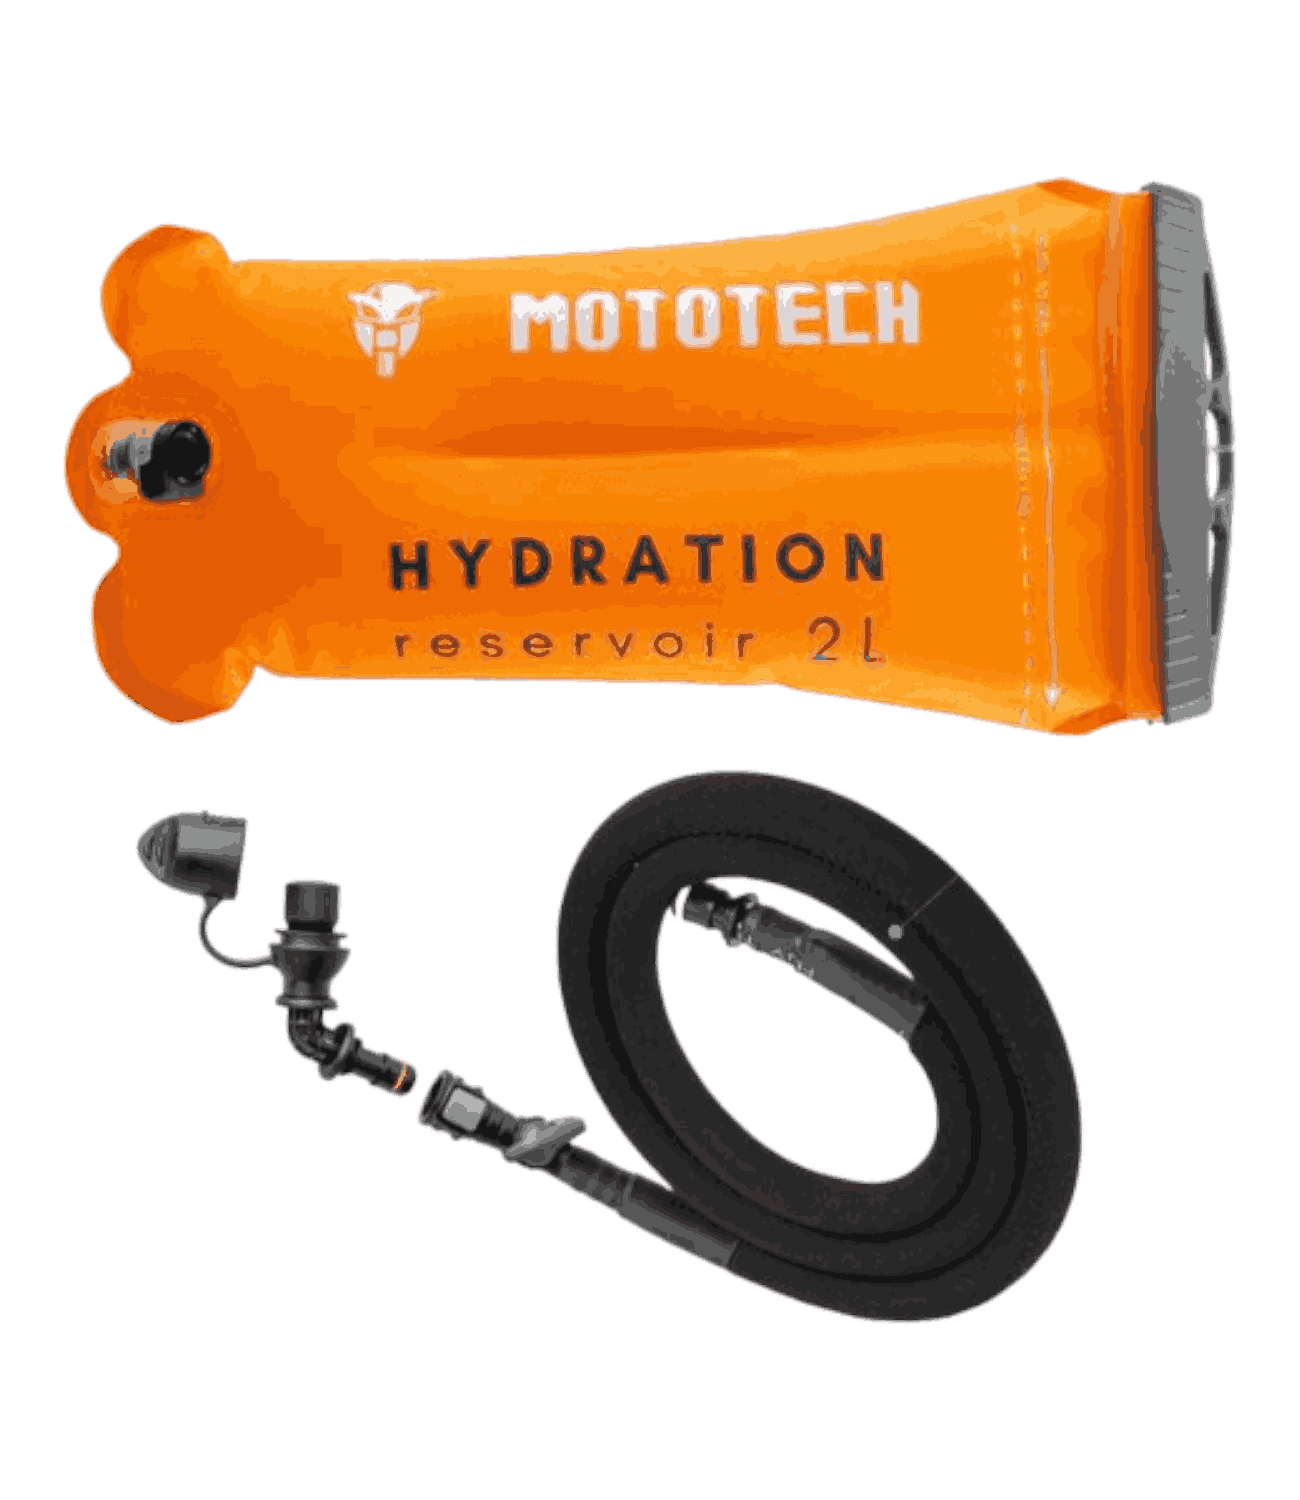 Mototech Hydration Reservoir 2L - Water Bladder